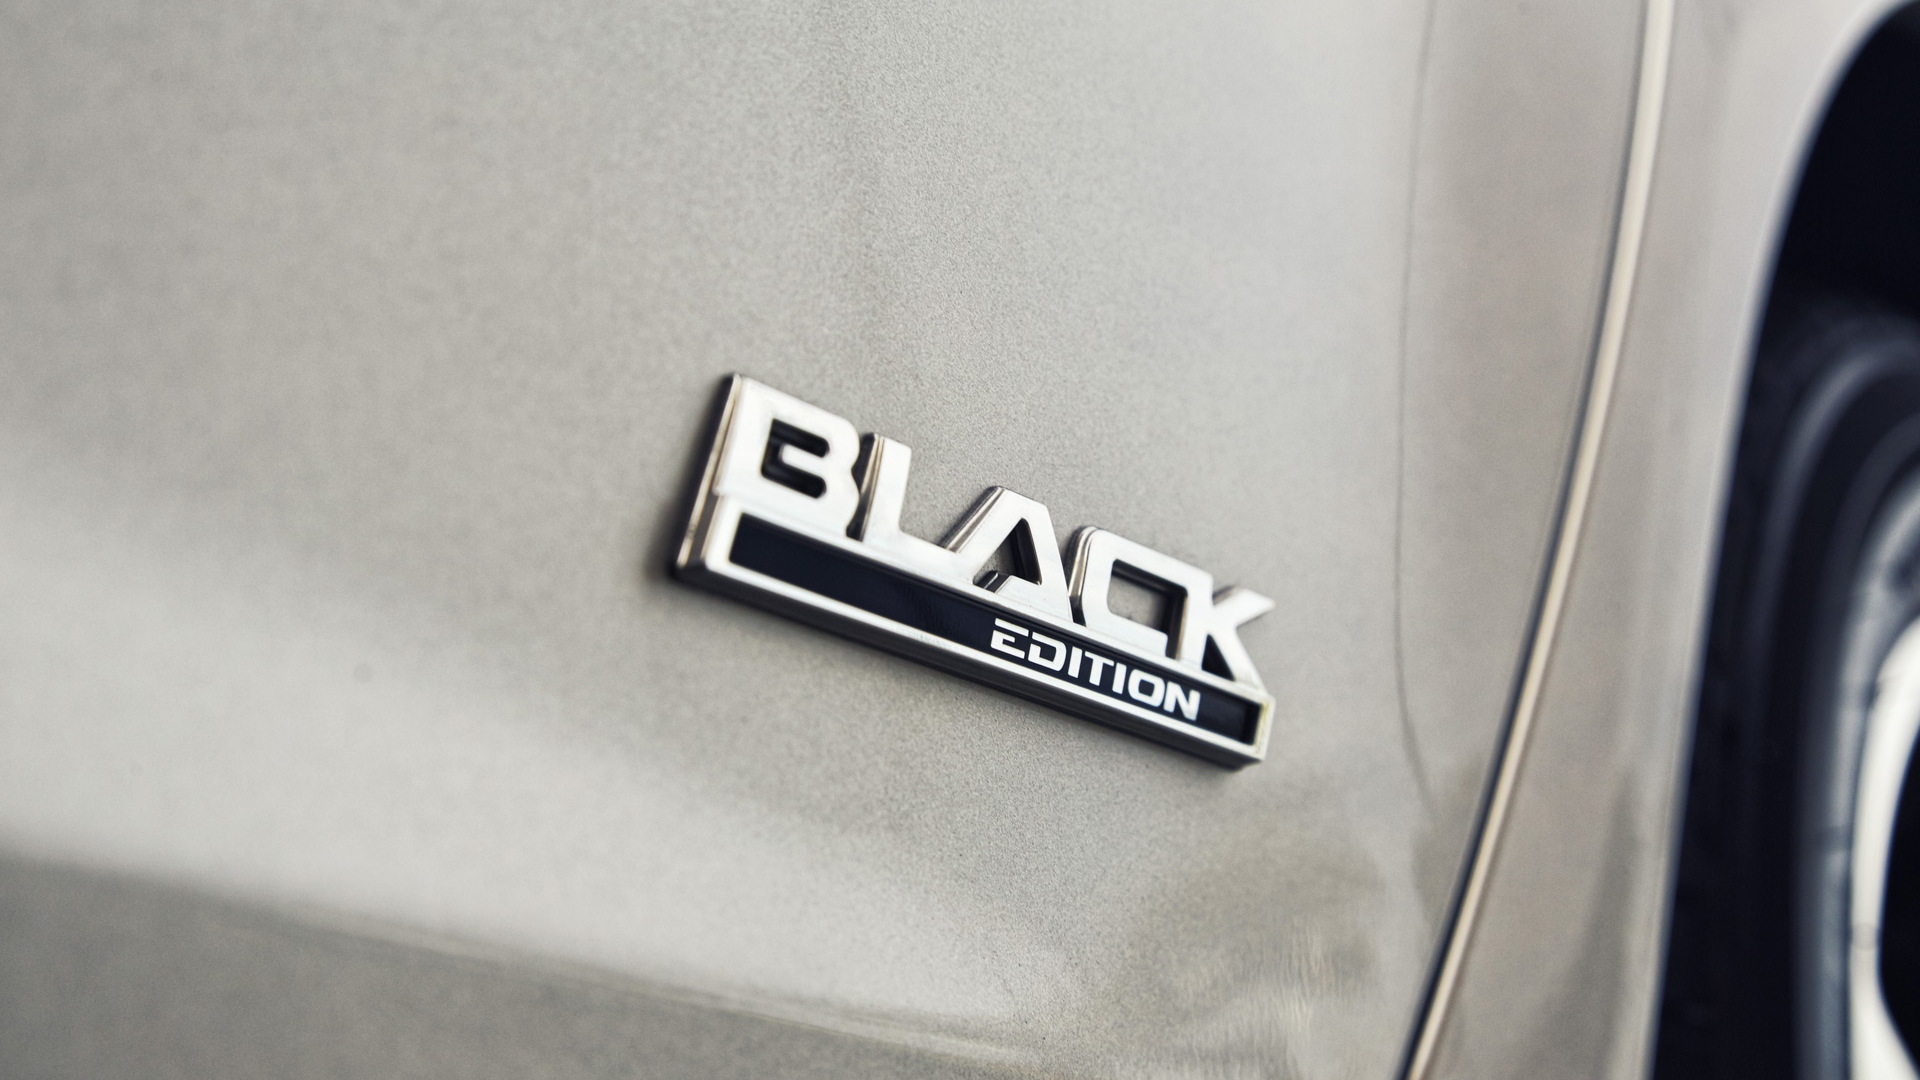 2016 Holden Commodore SV6 Black Edition